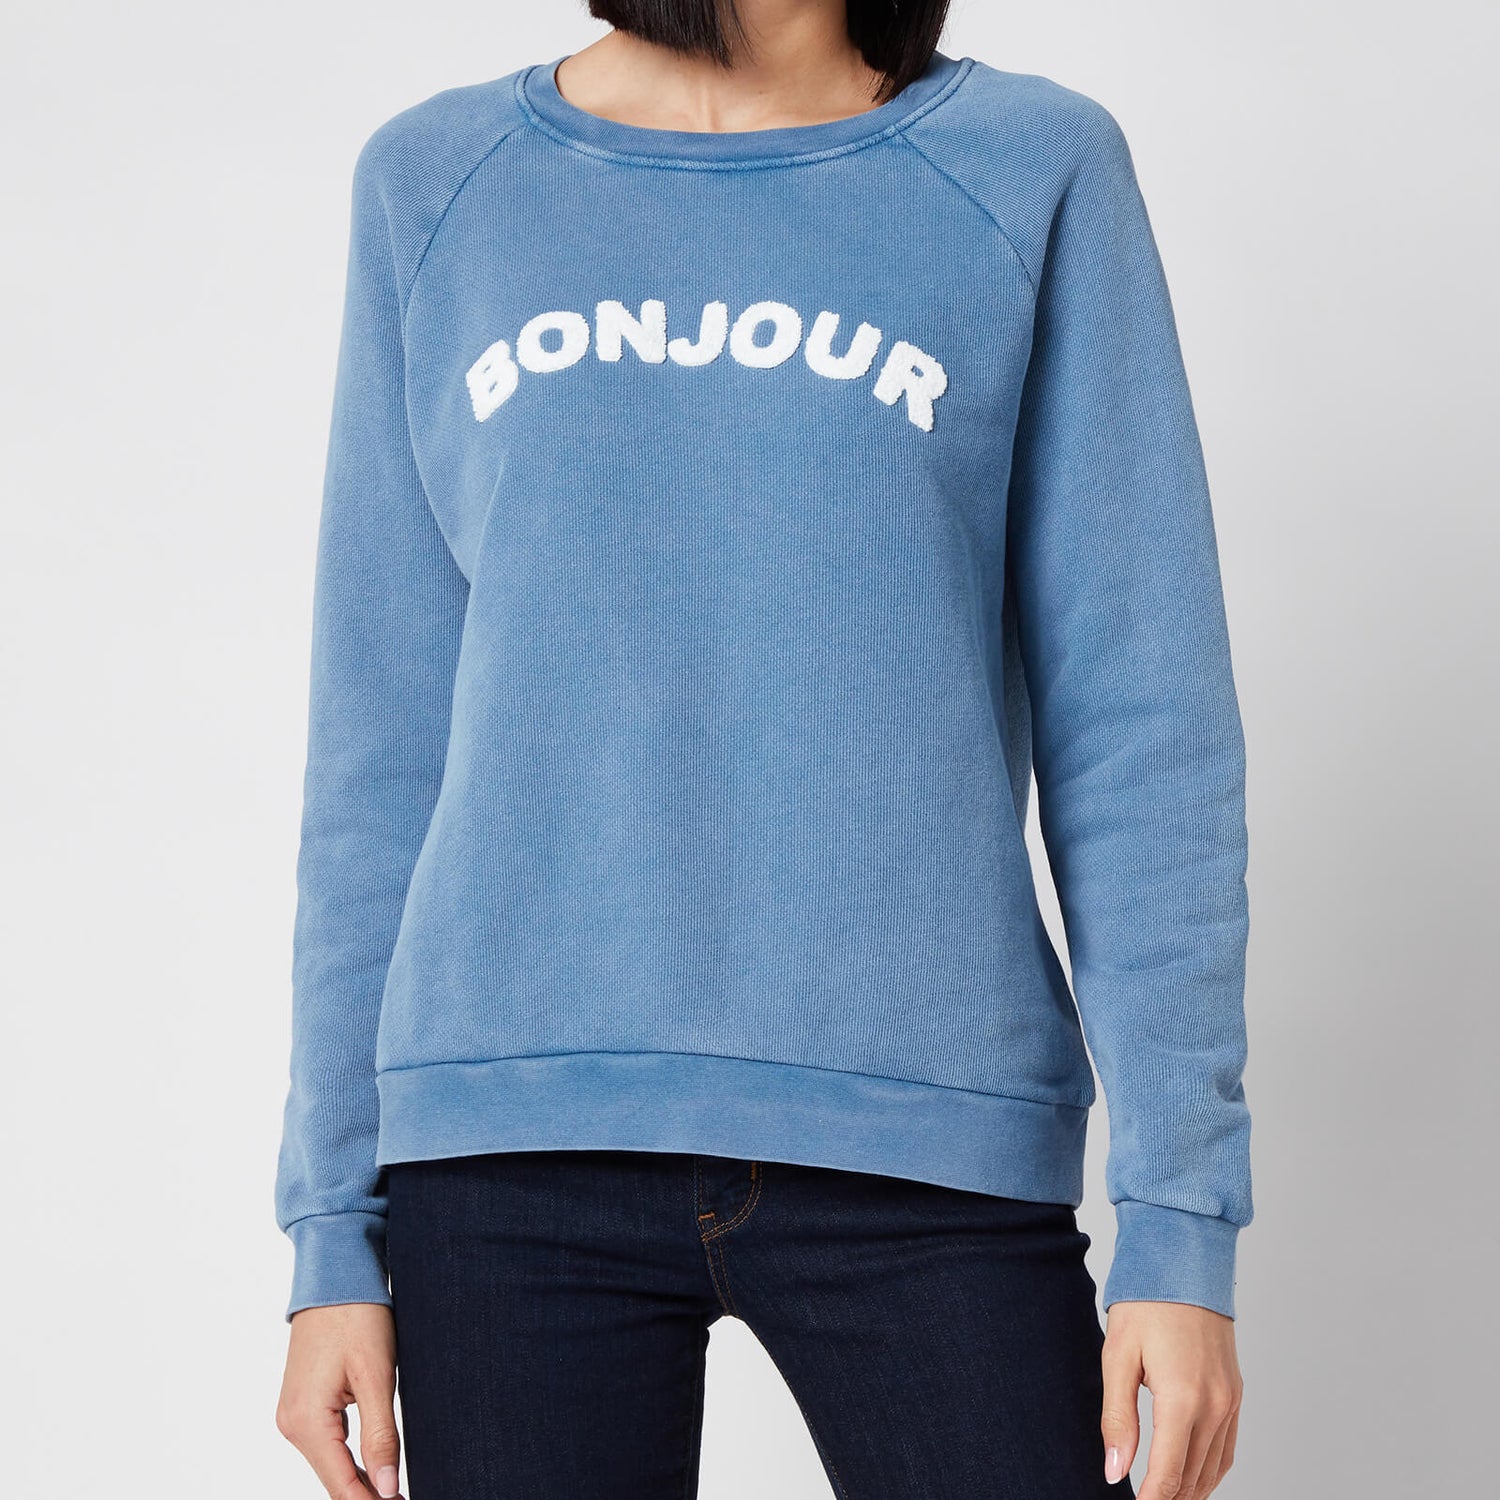 Whistles Women's Bonjour Logo Sweatshirt - Blue